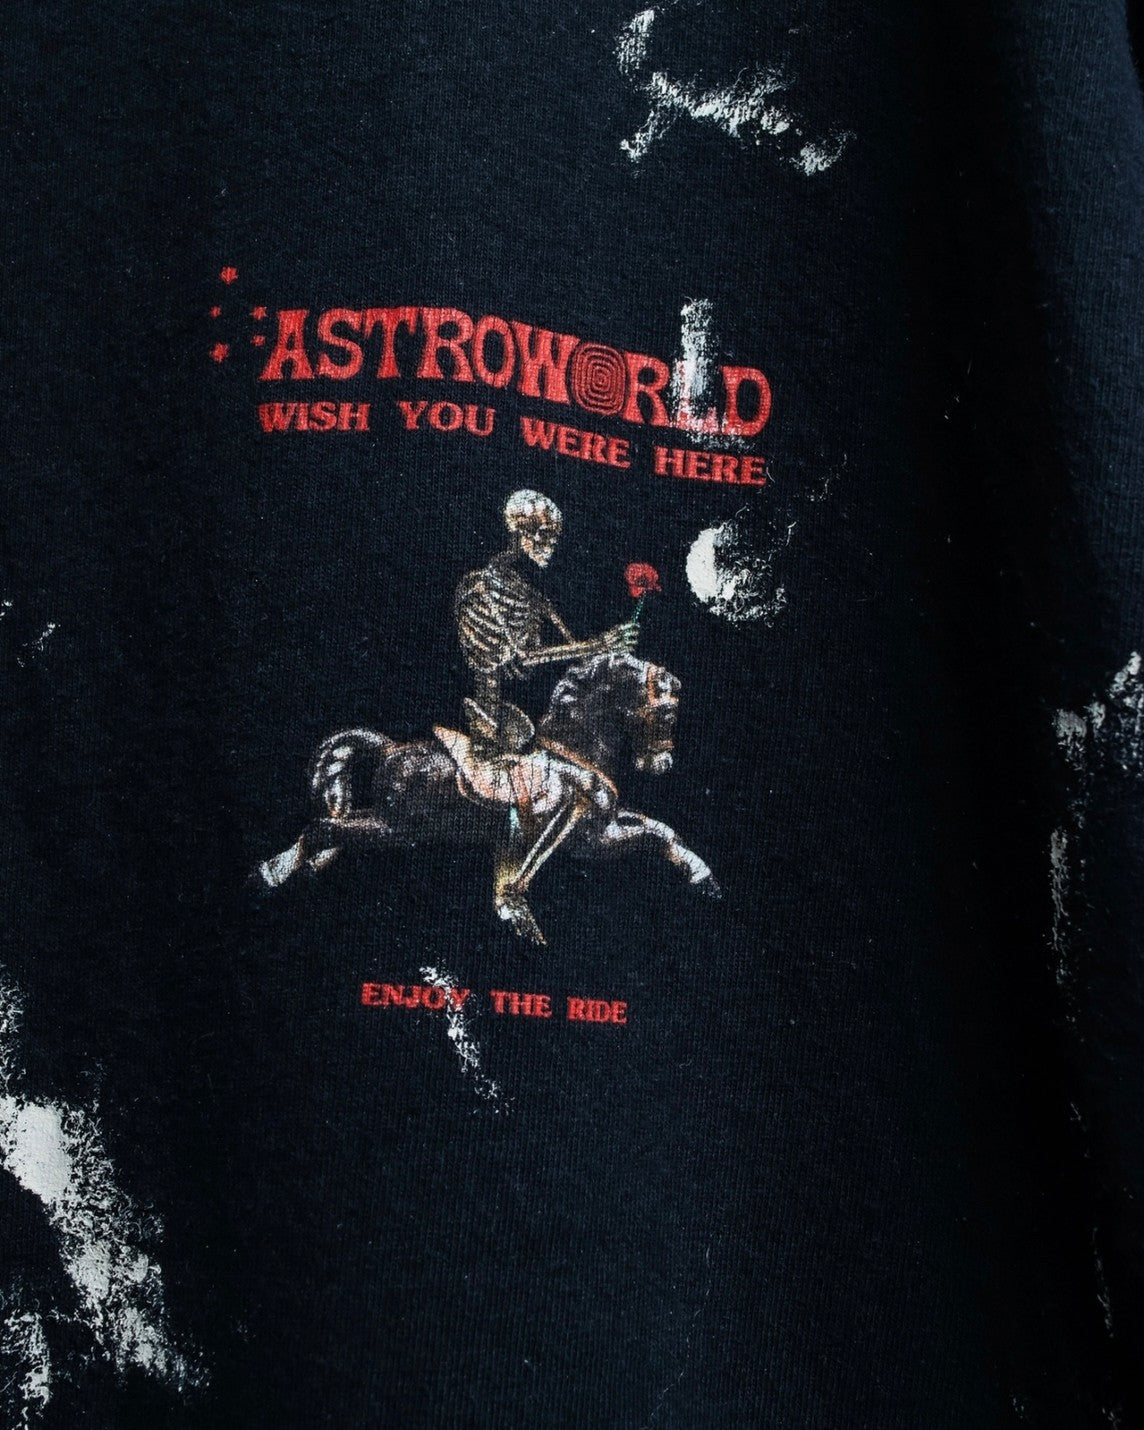 Custom Painted "ASTROWORLD" T-Shirts